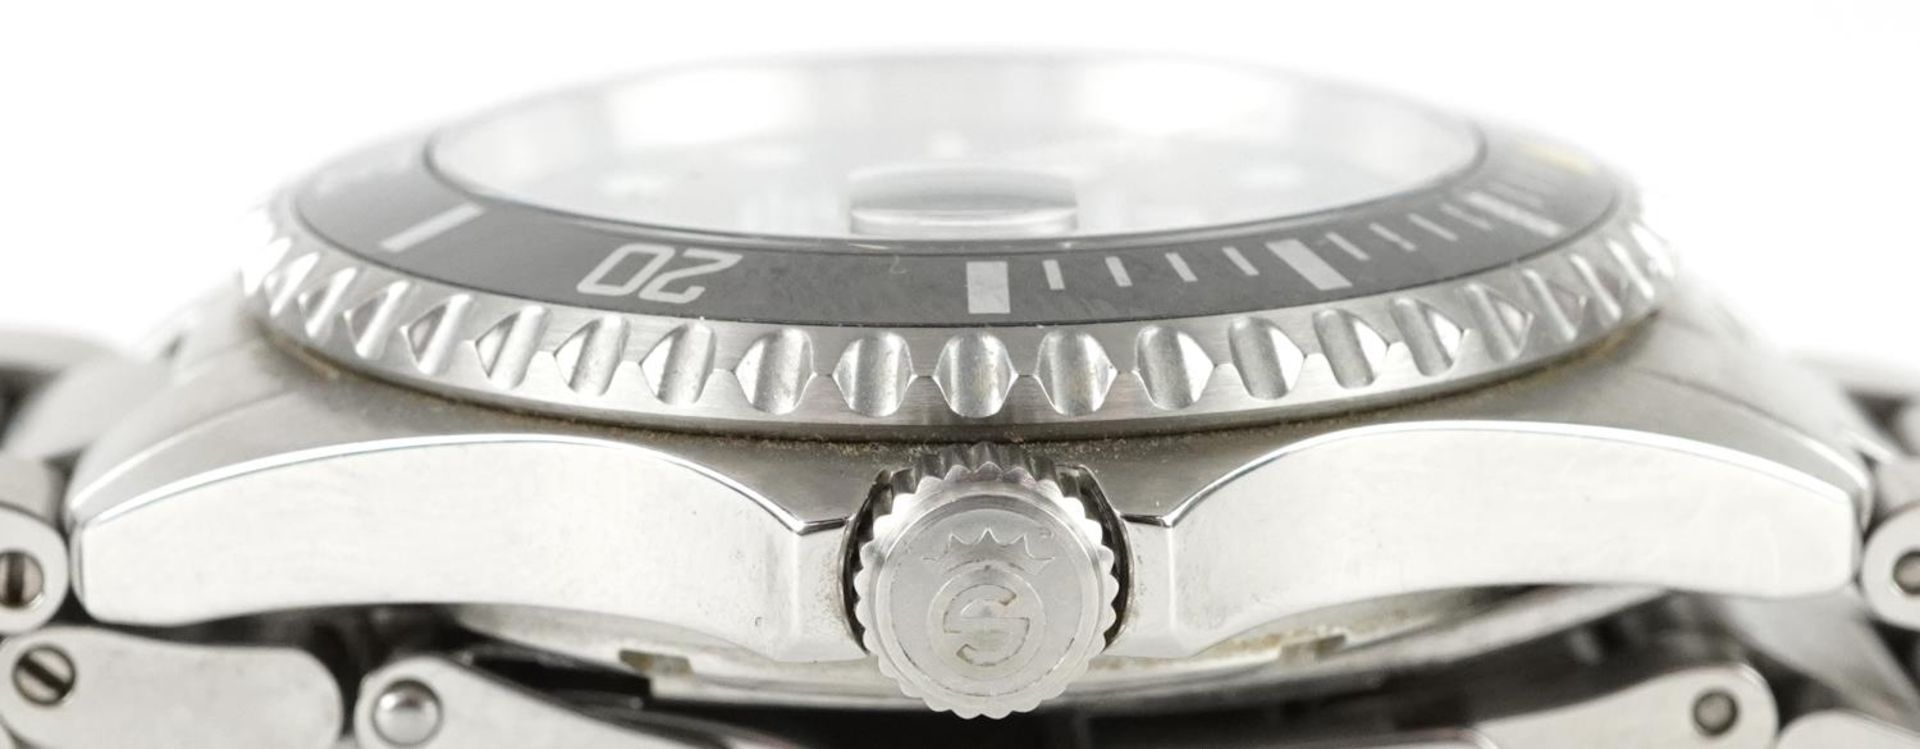 Steinhart, gentlemen's Steinhart Ocean One automatic diver's wristwatch with date aperture, 42mm - Image 5 of 5